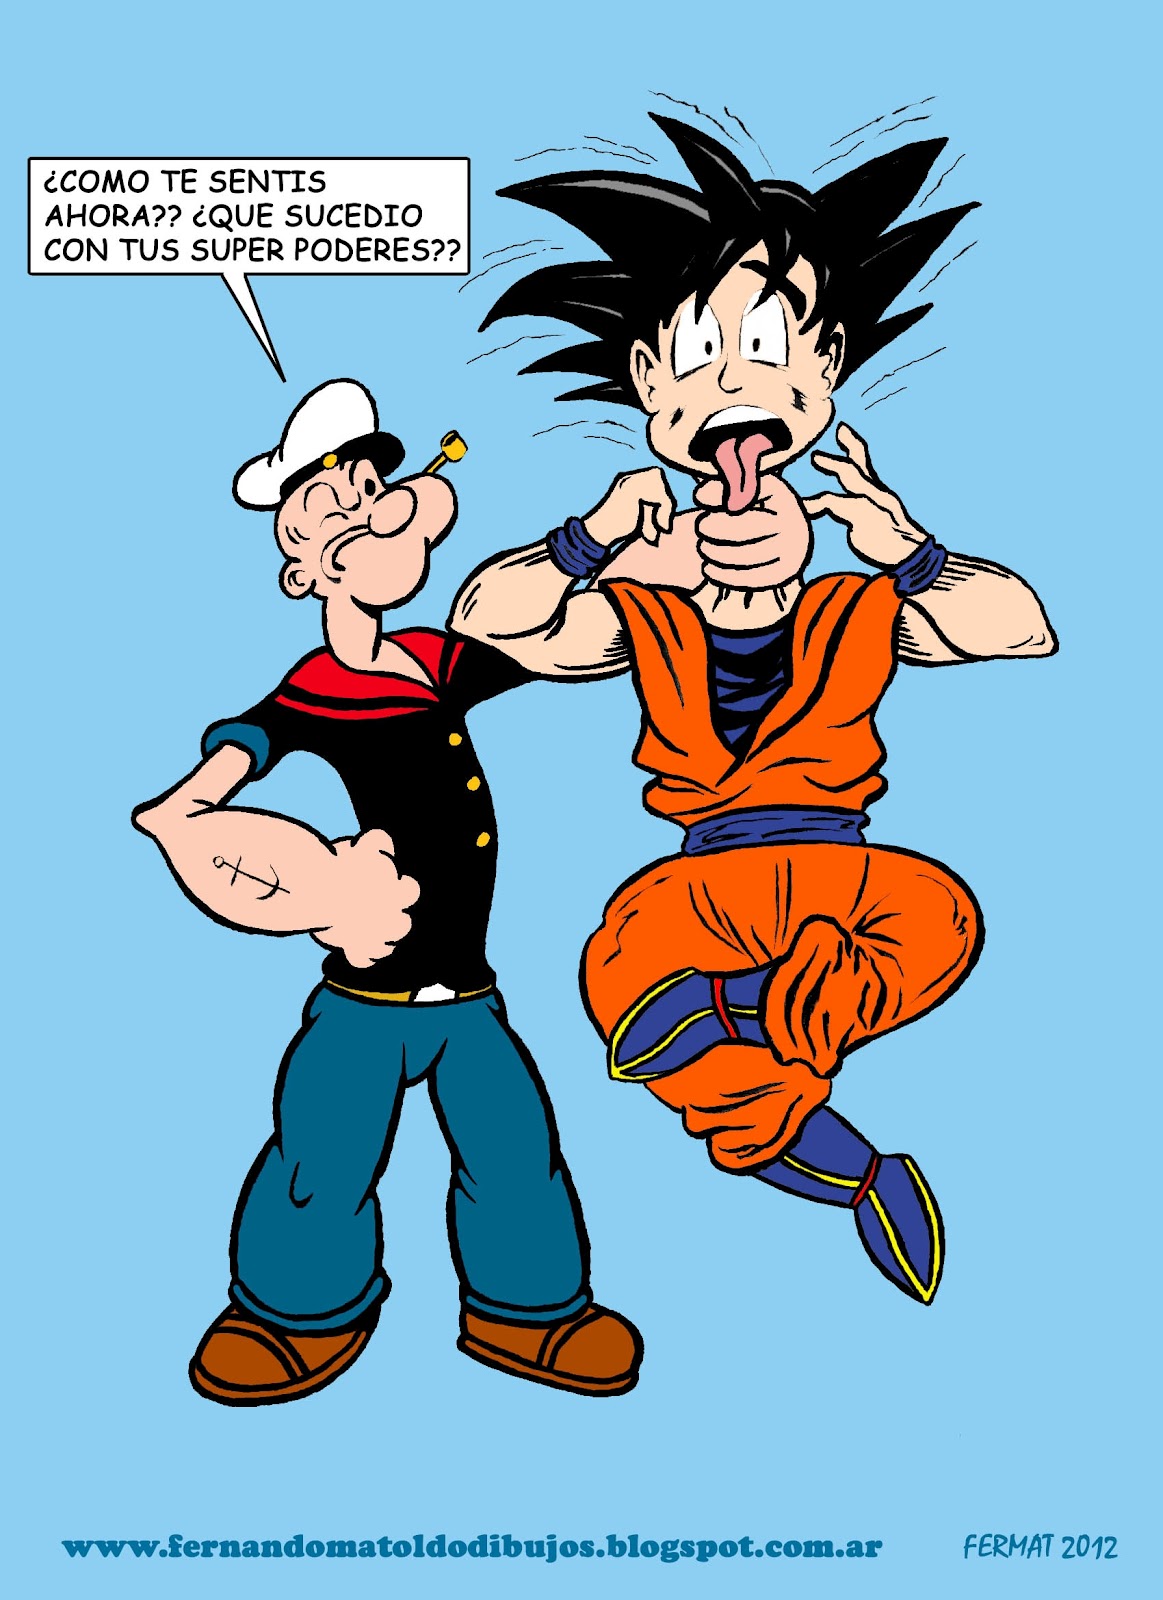 Popeye Vs Goku Image Wallpaper for Sony XPeria Z2. 